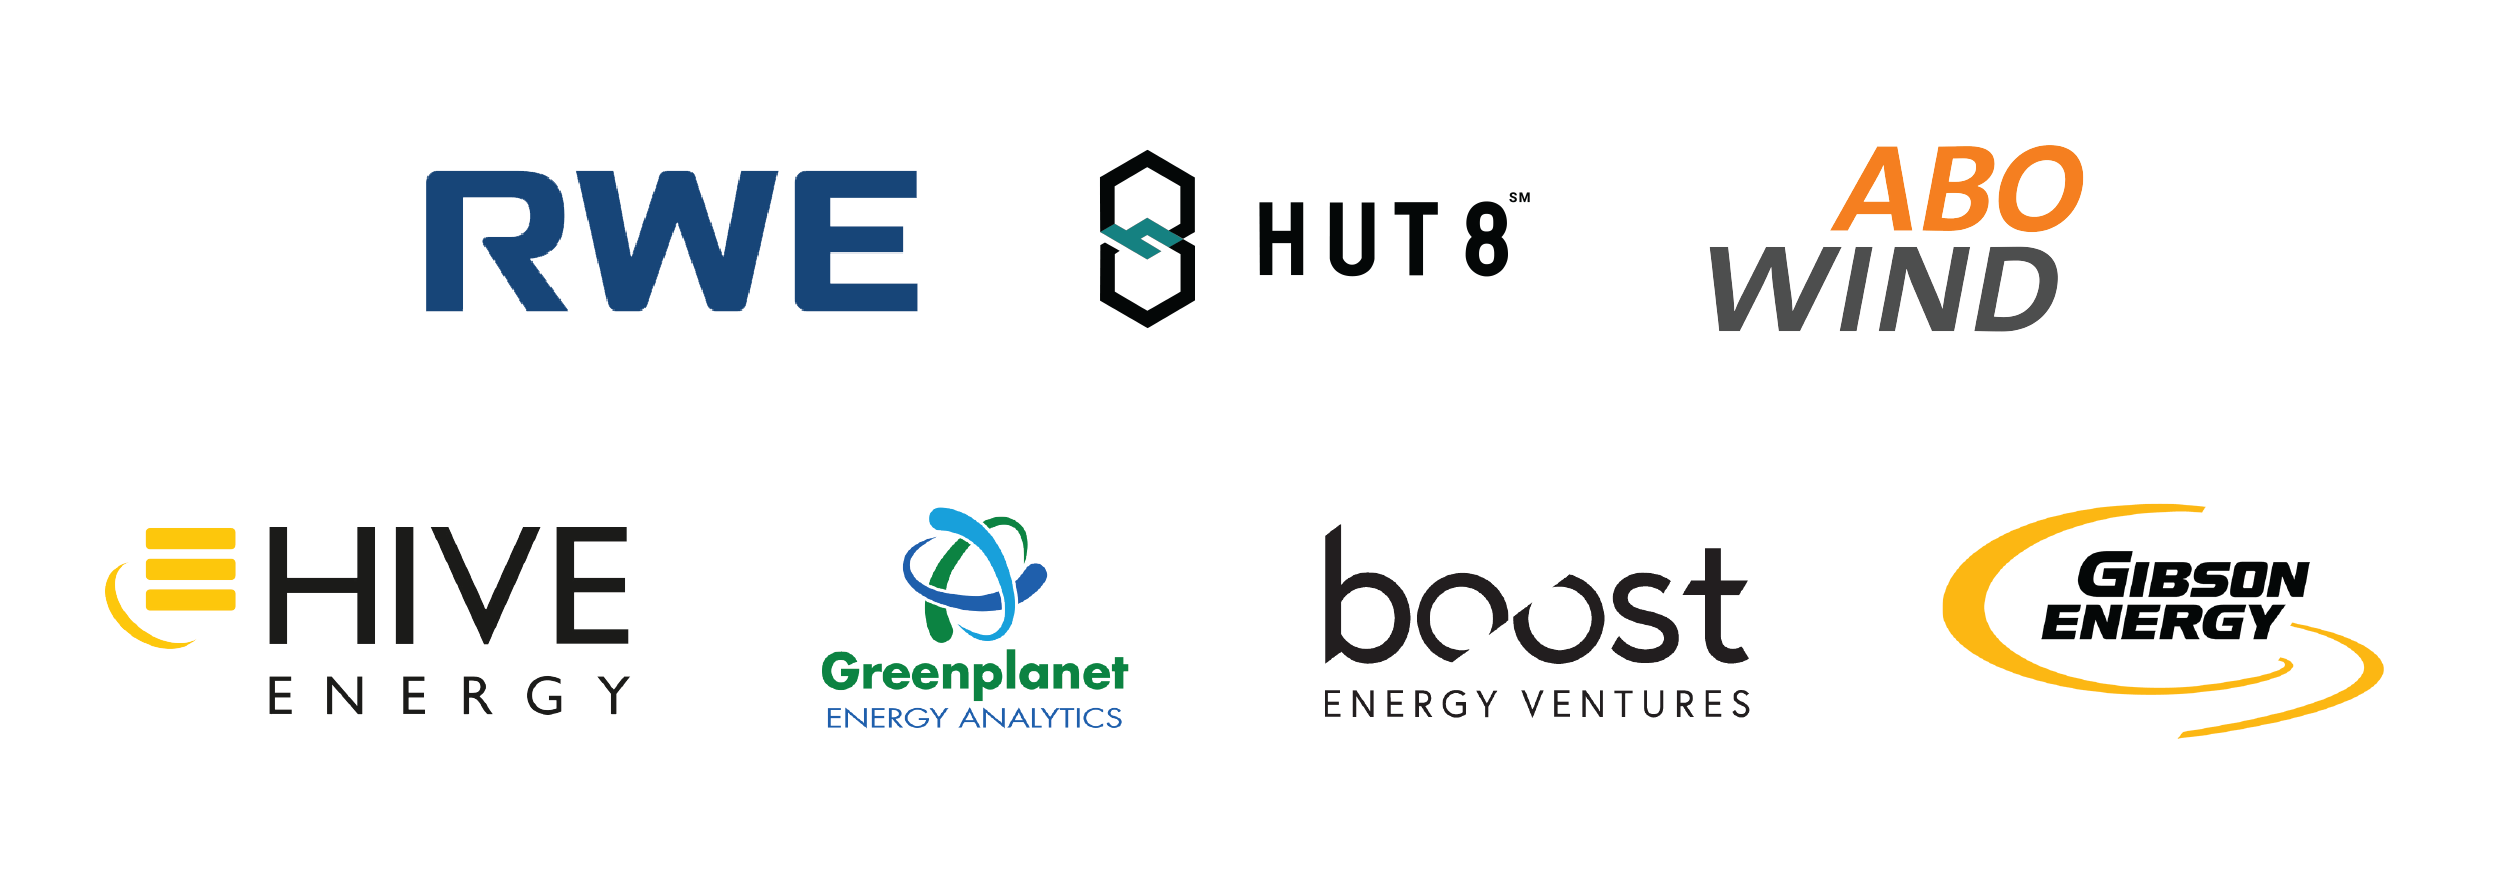 Logos: RWE Renewables, ABO Wind, Hut 8 Mining, HIVE Energy, Greenplanet Energy Analytics, Boost Energy Ventures, and Gibson Energy